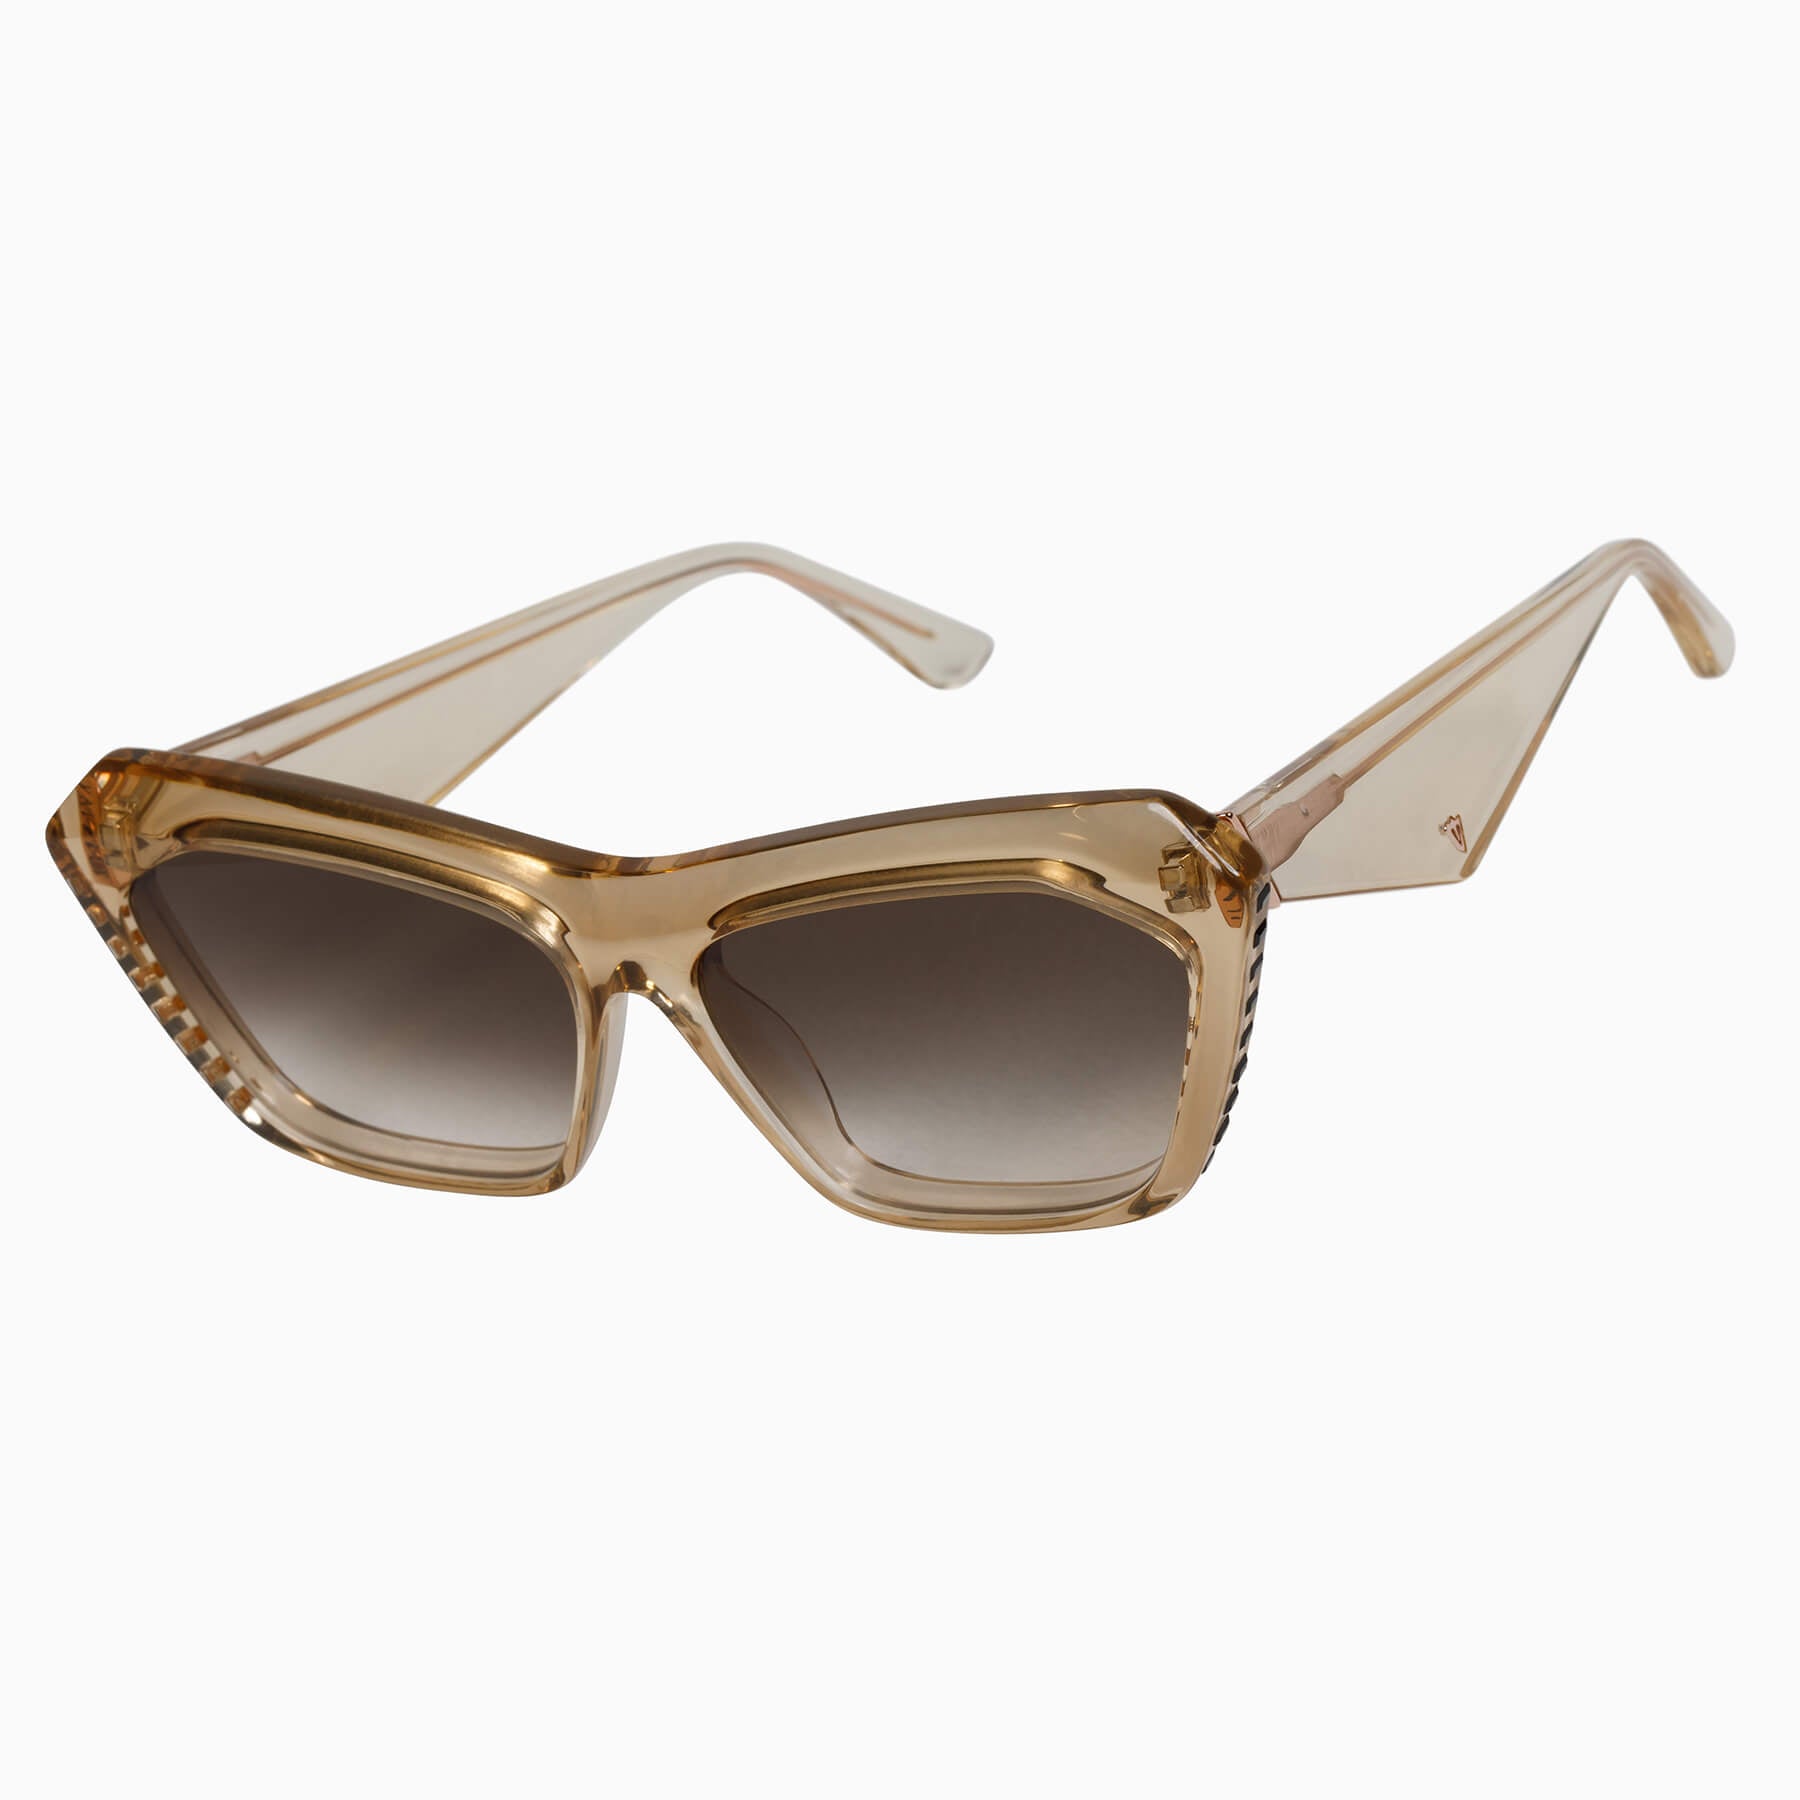 Louis Vuitton LV Link Light Cat Eye Sunglasses Black Acetate & Metal. Size W